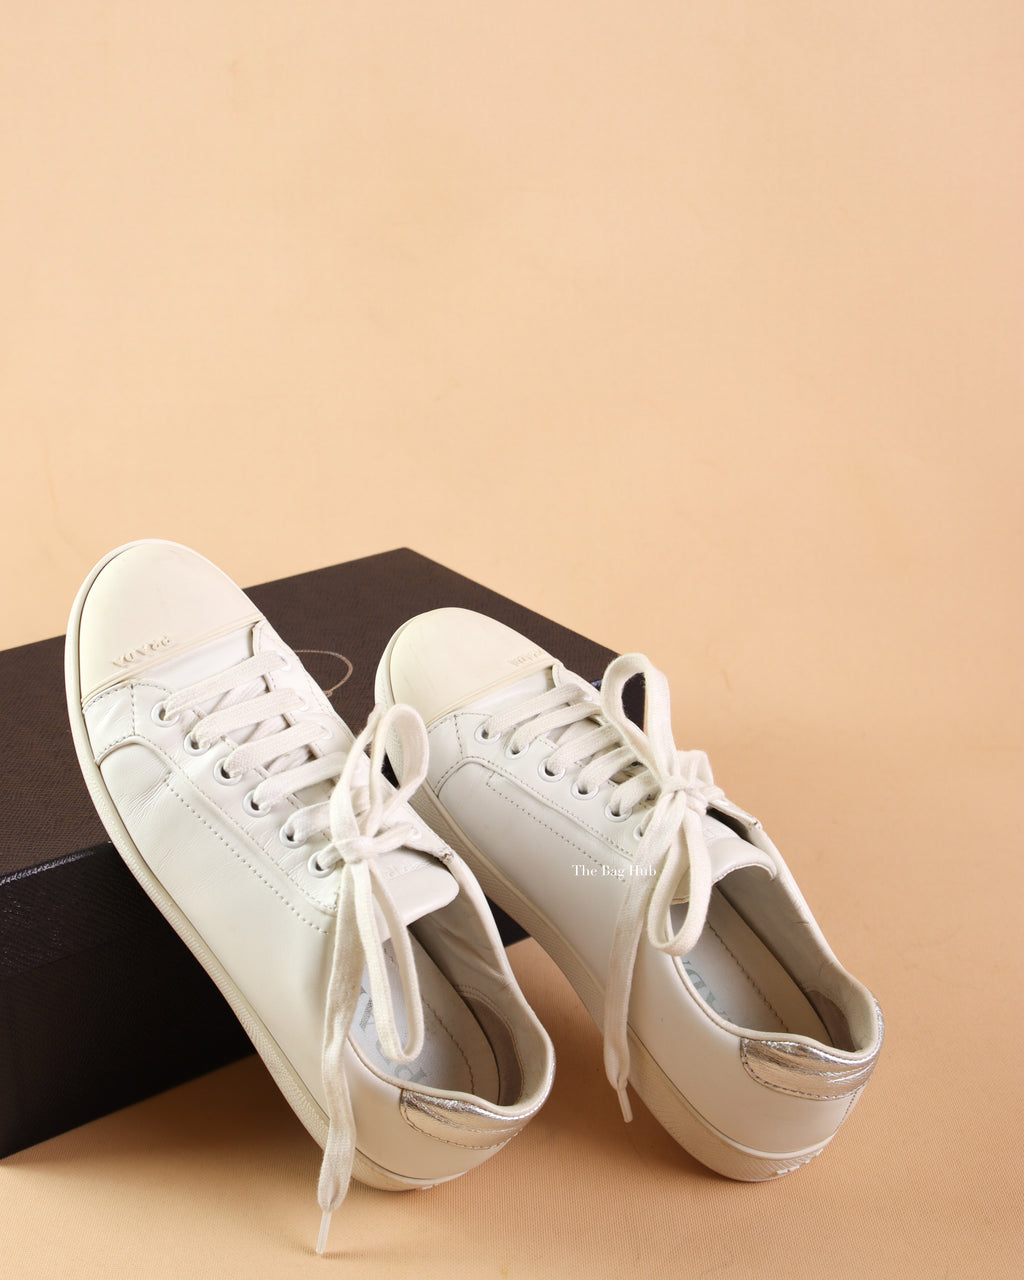 Prada White Calzature Donna Sneakers Size 35.5-1